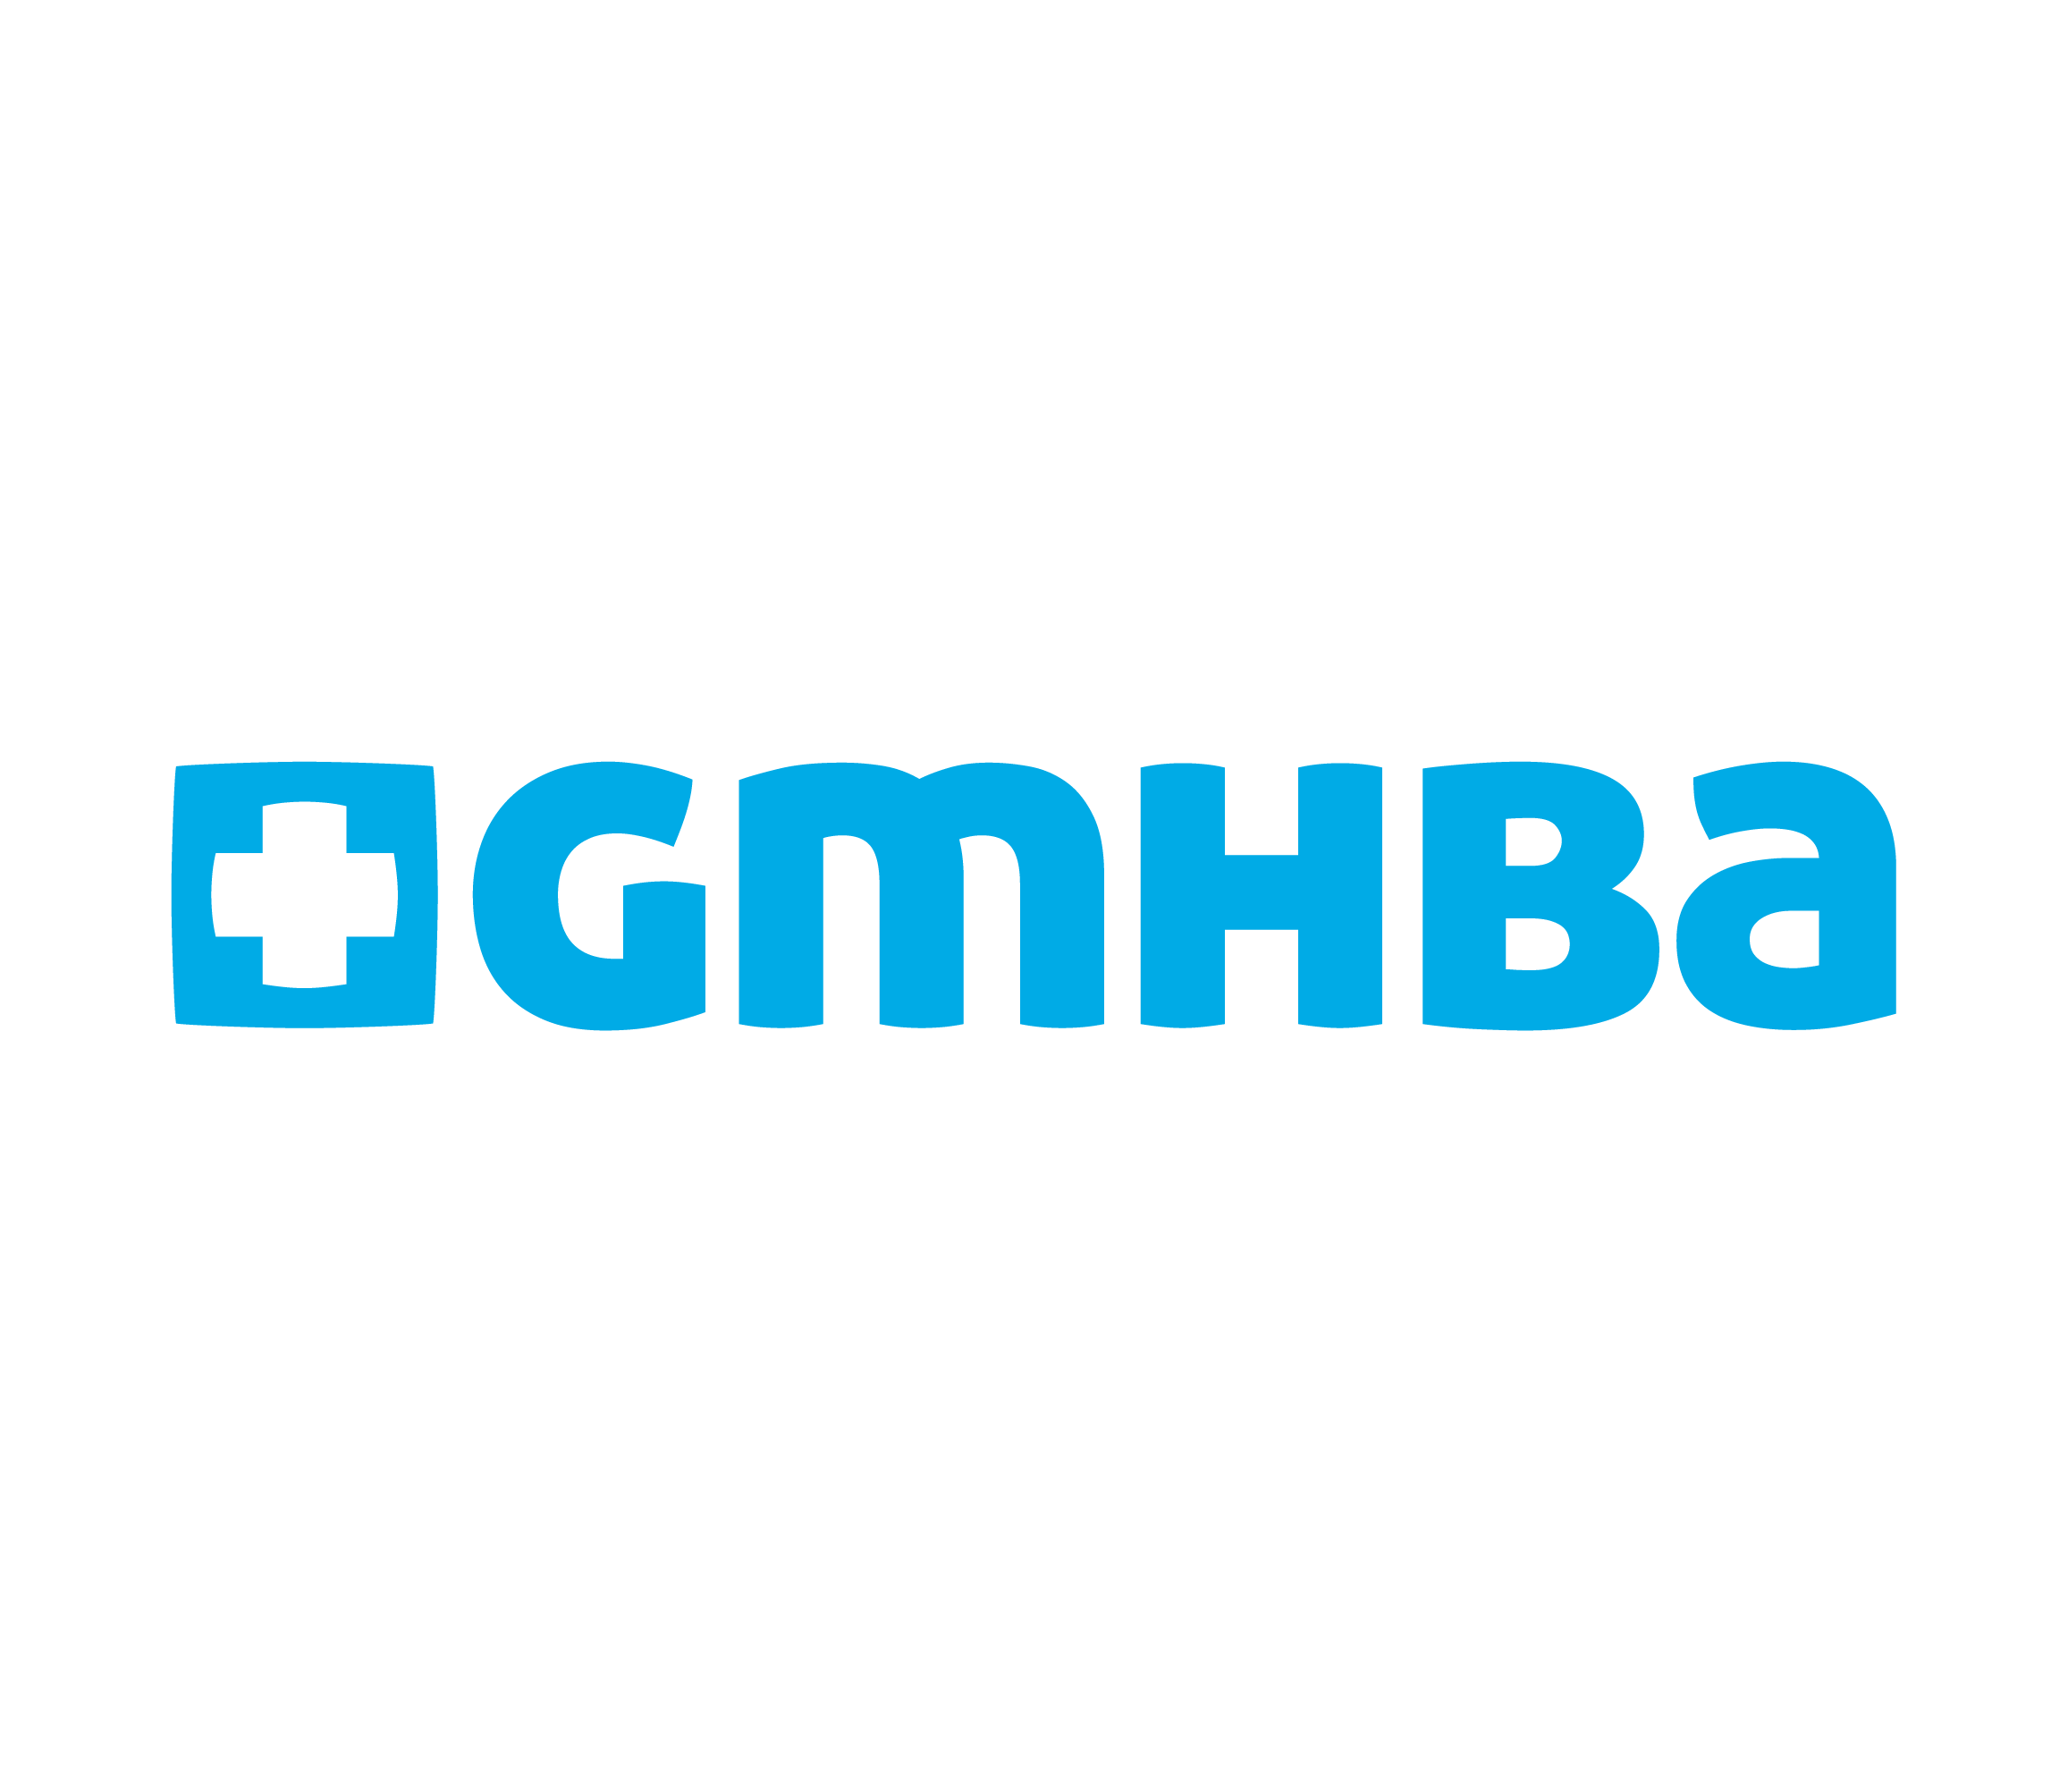 GMHBA health insurance